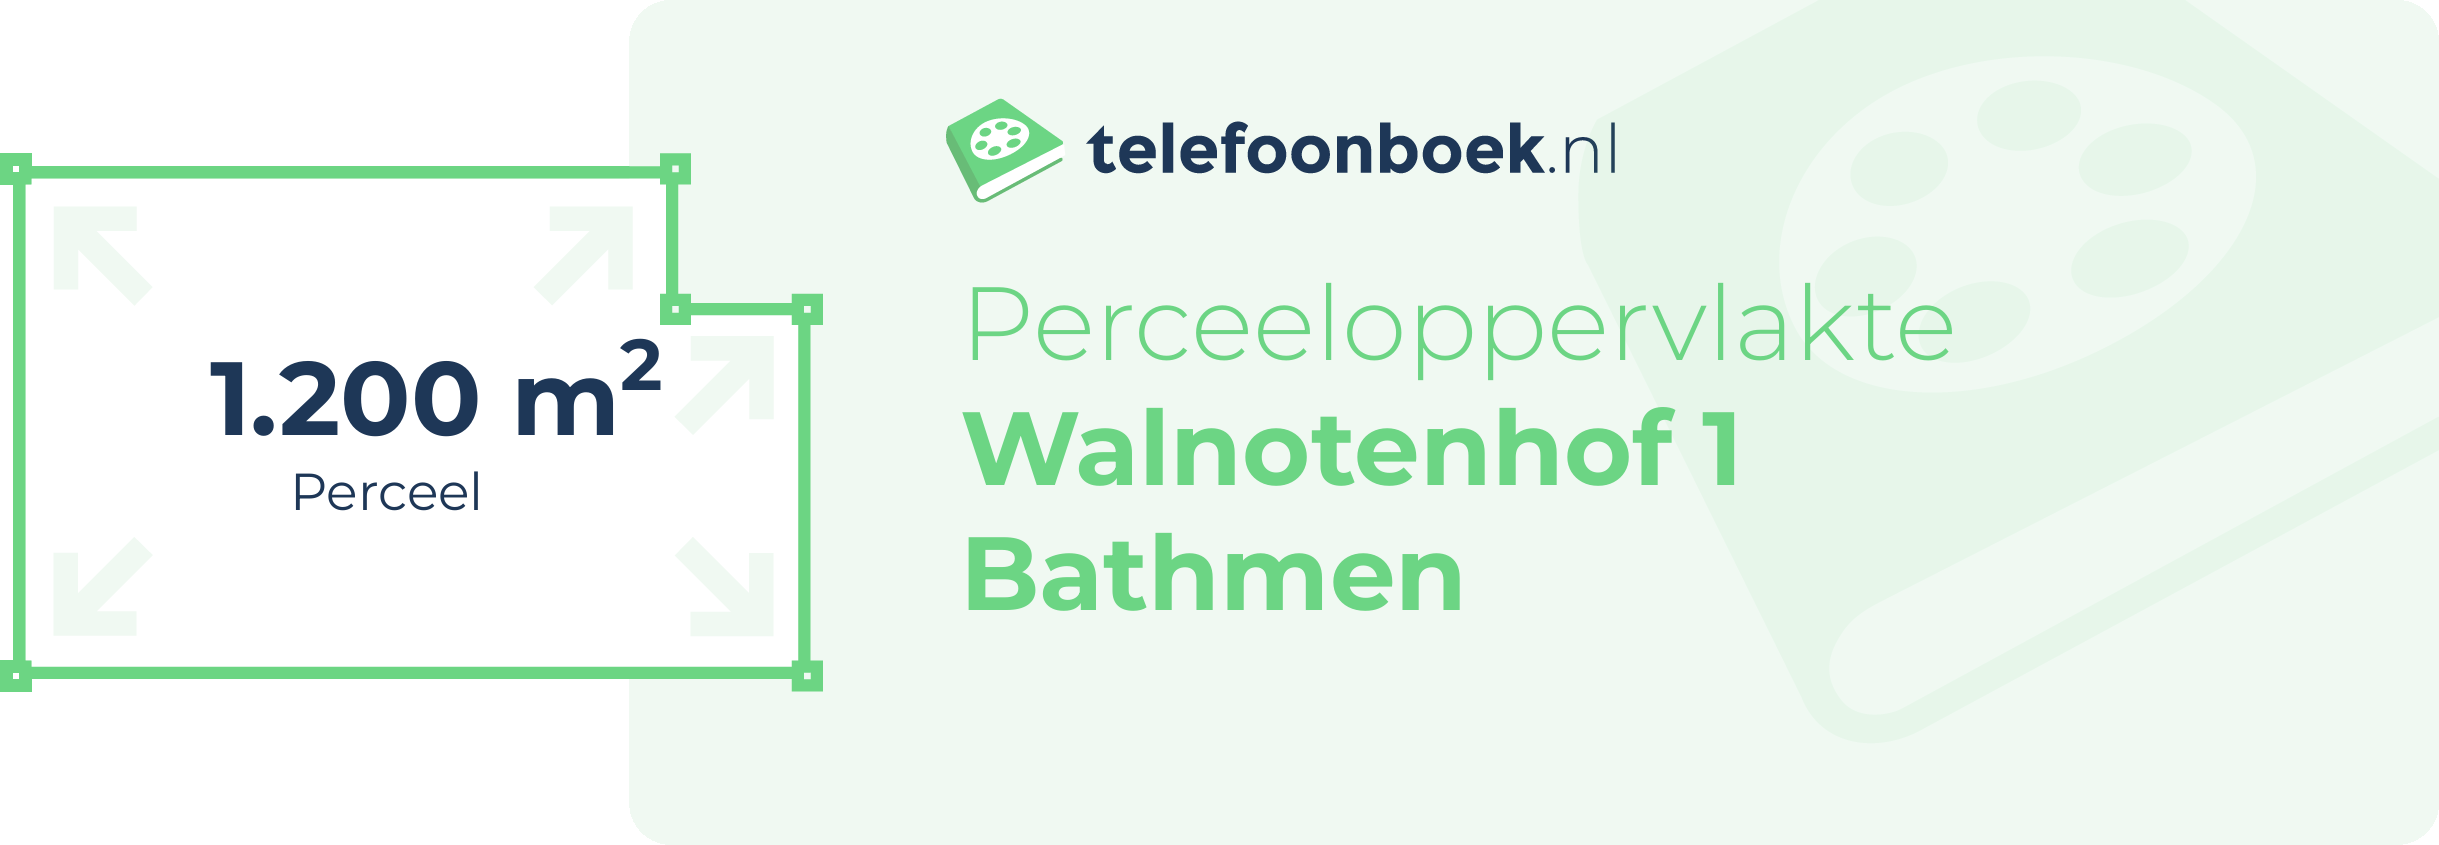 Perceeloppervlakte Walnotenhof 1 Bathmen